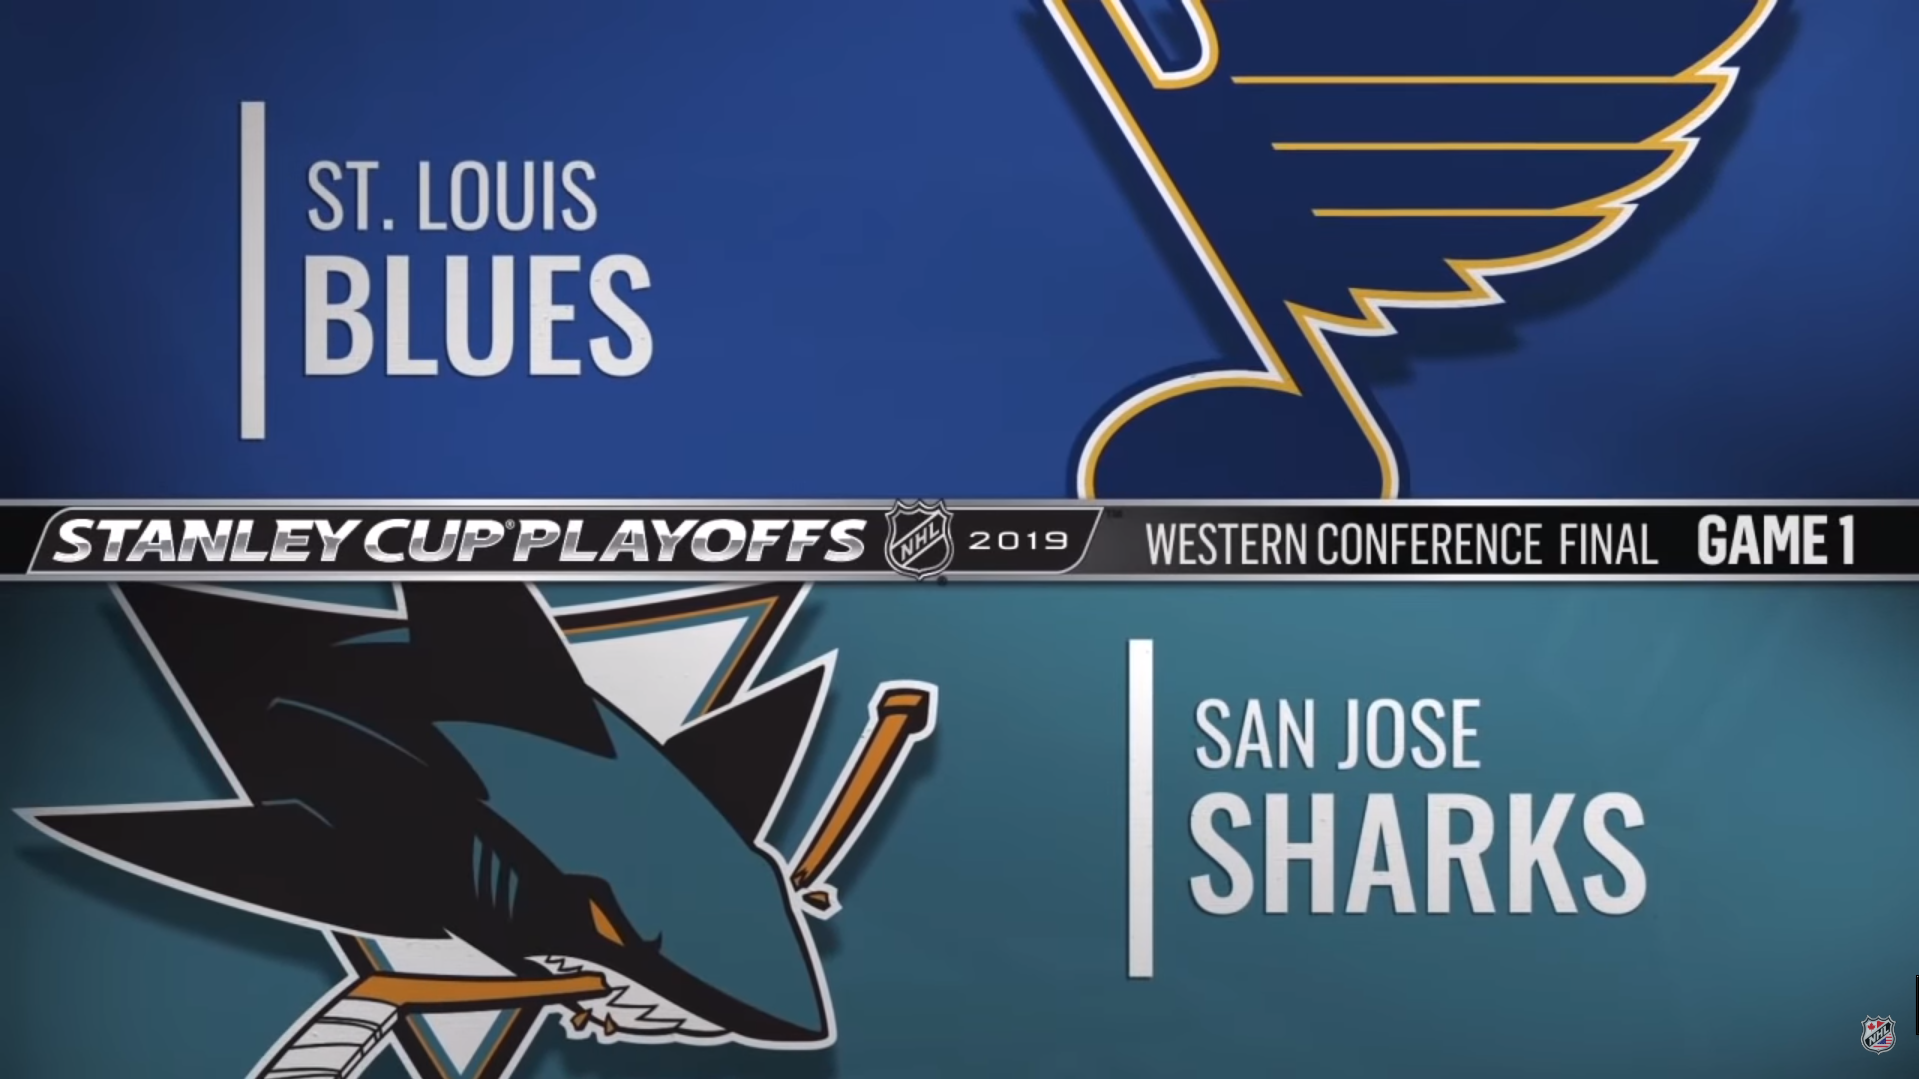 St. Louis Blues - San Jose Sharks